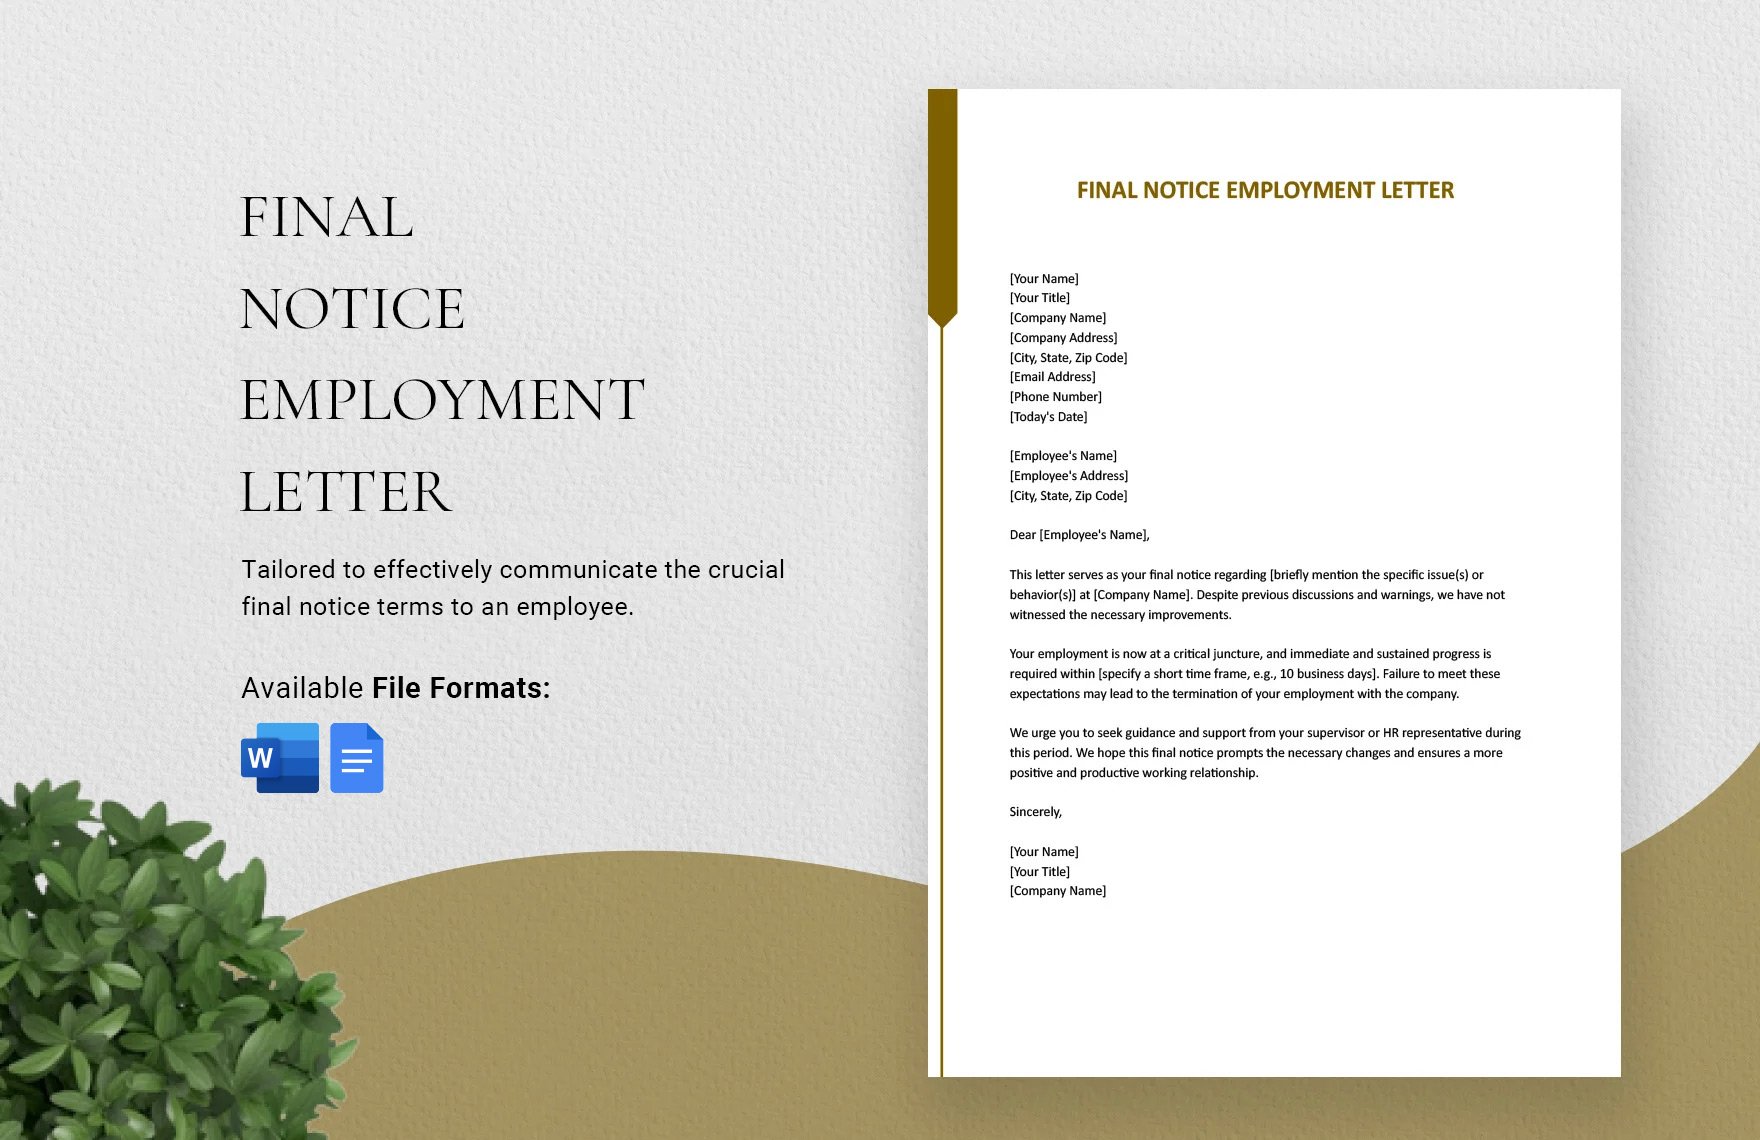 Final Notice Employment Letter